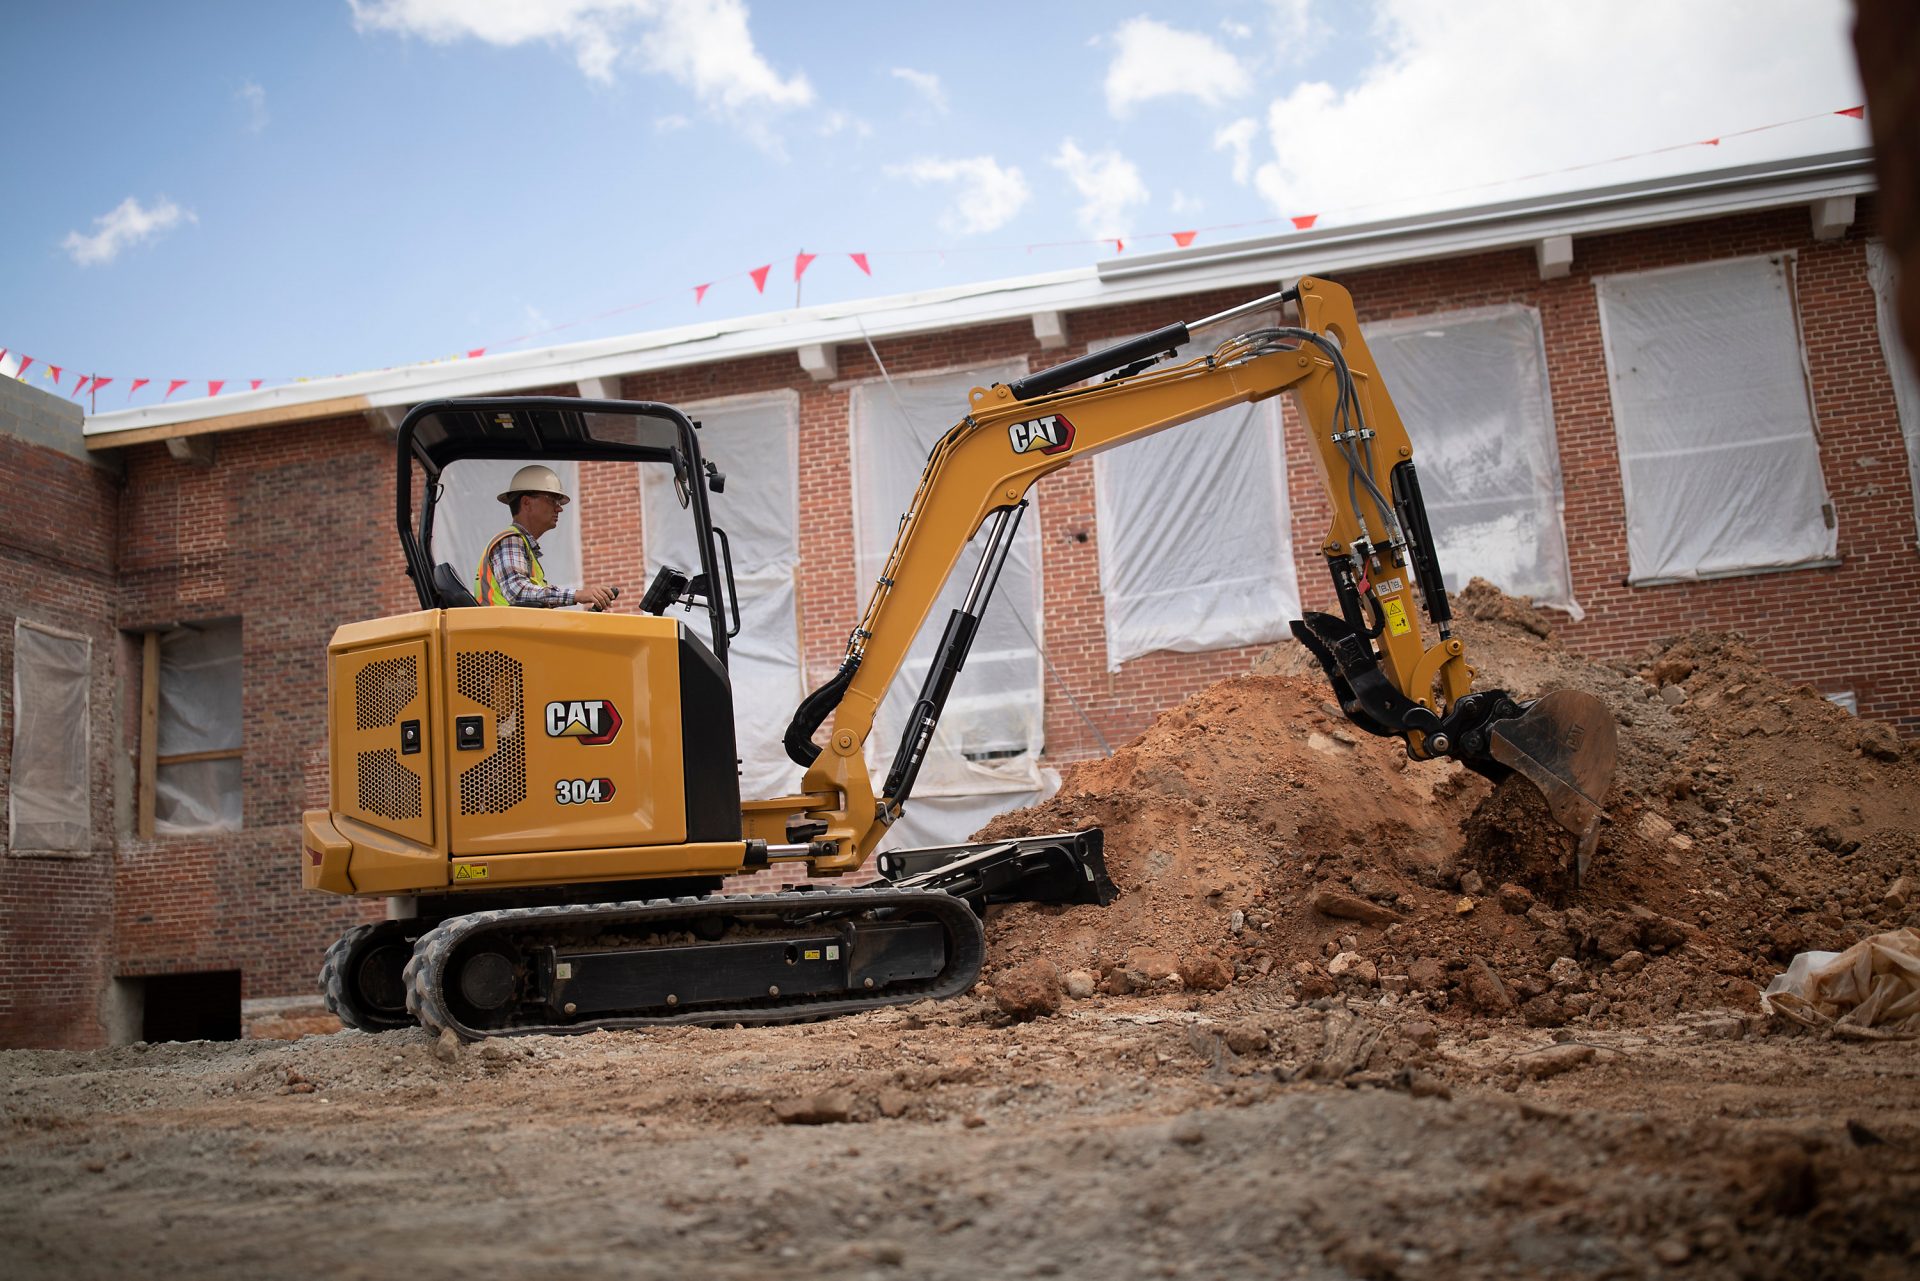 CAT's next-gen 304 mini excavator scooping material on a job site.